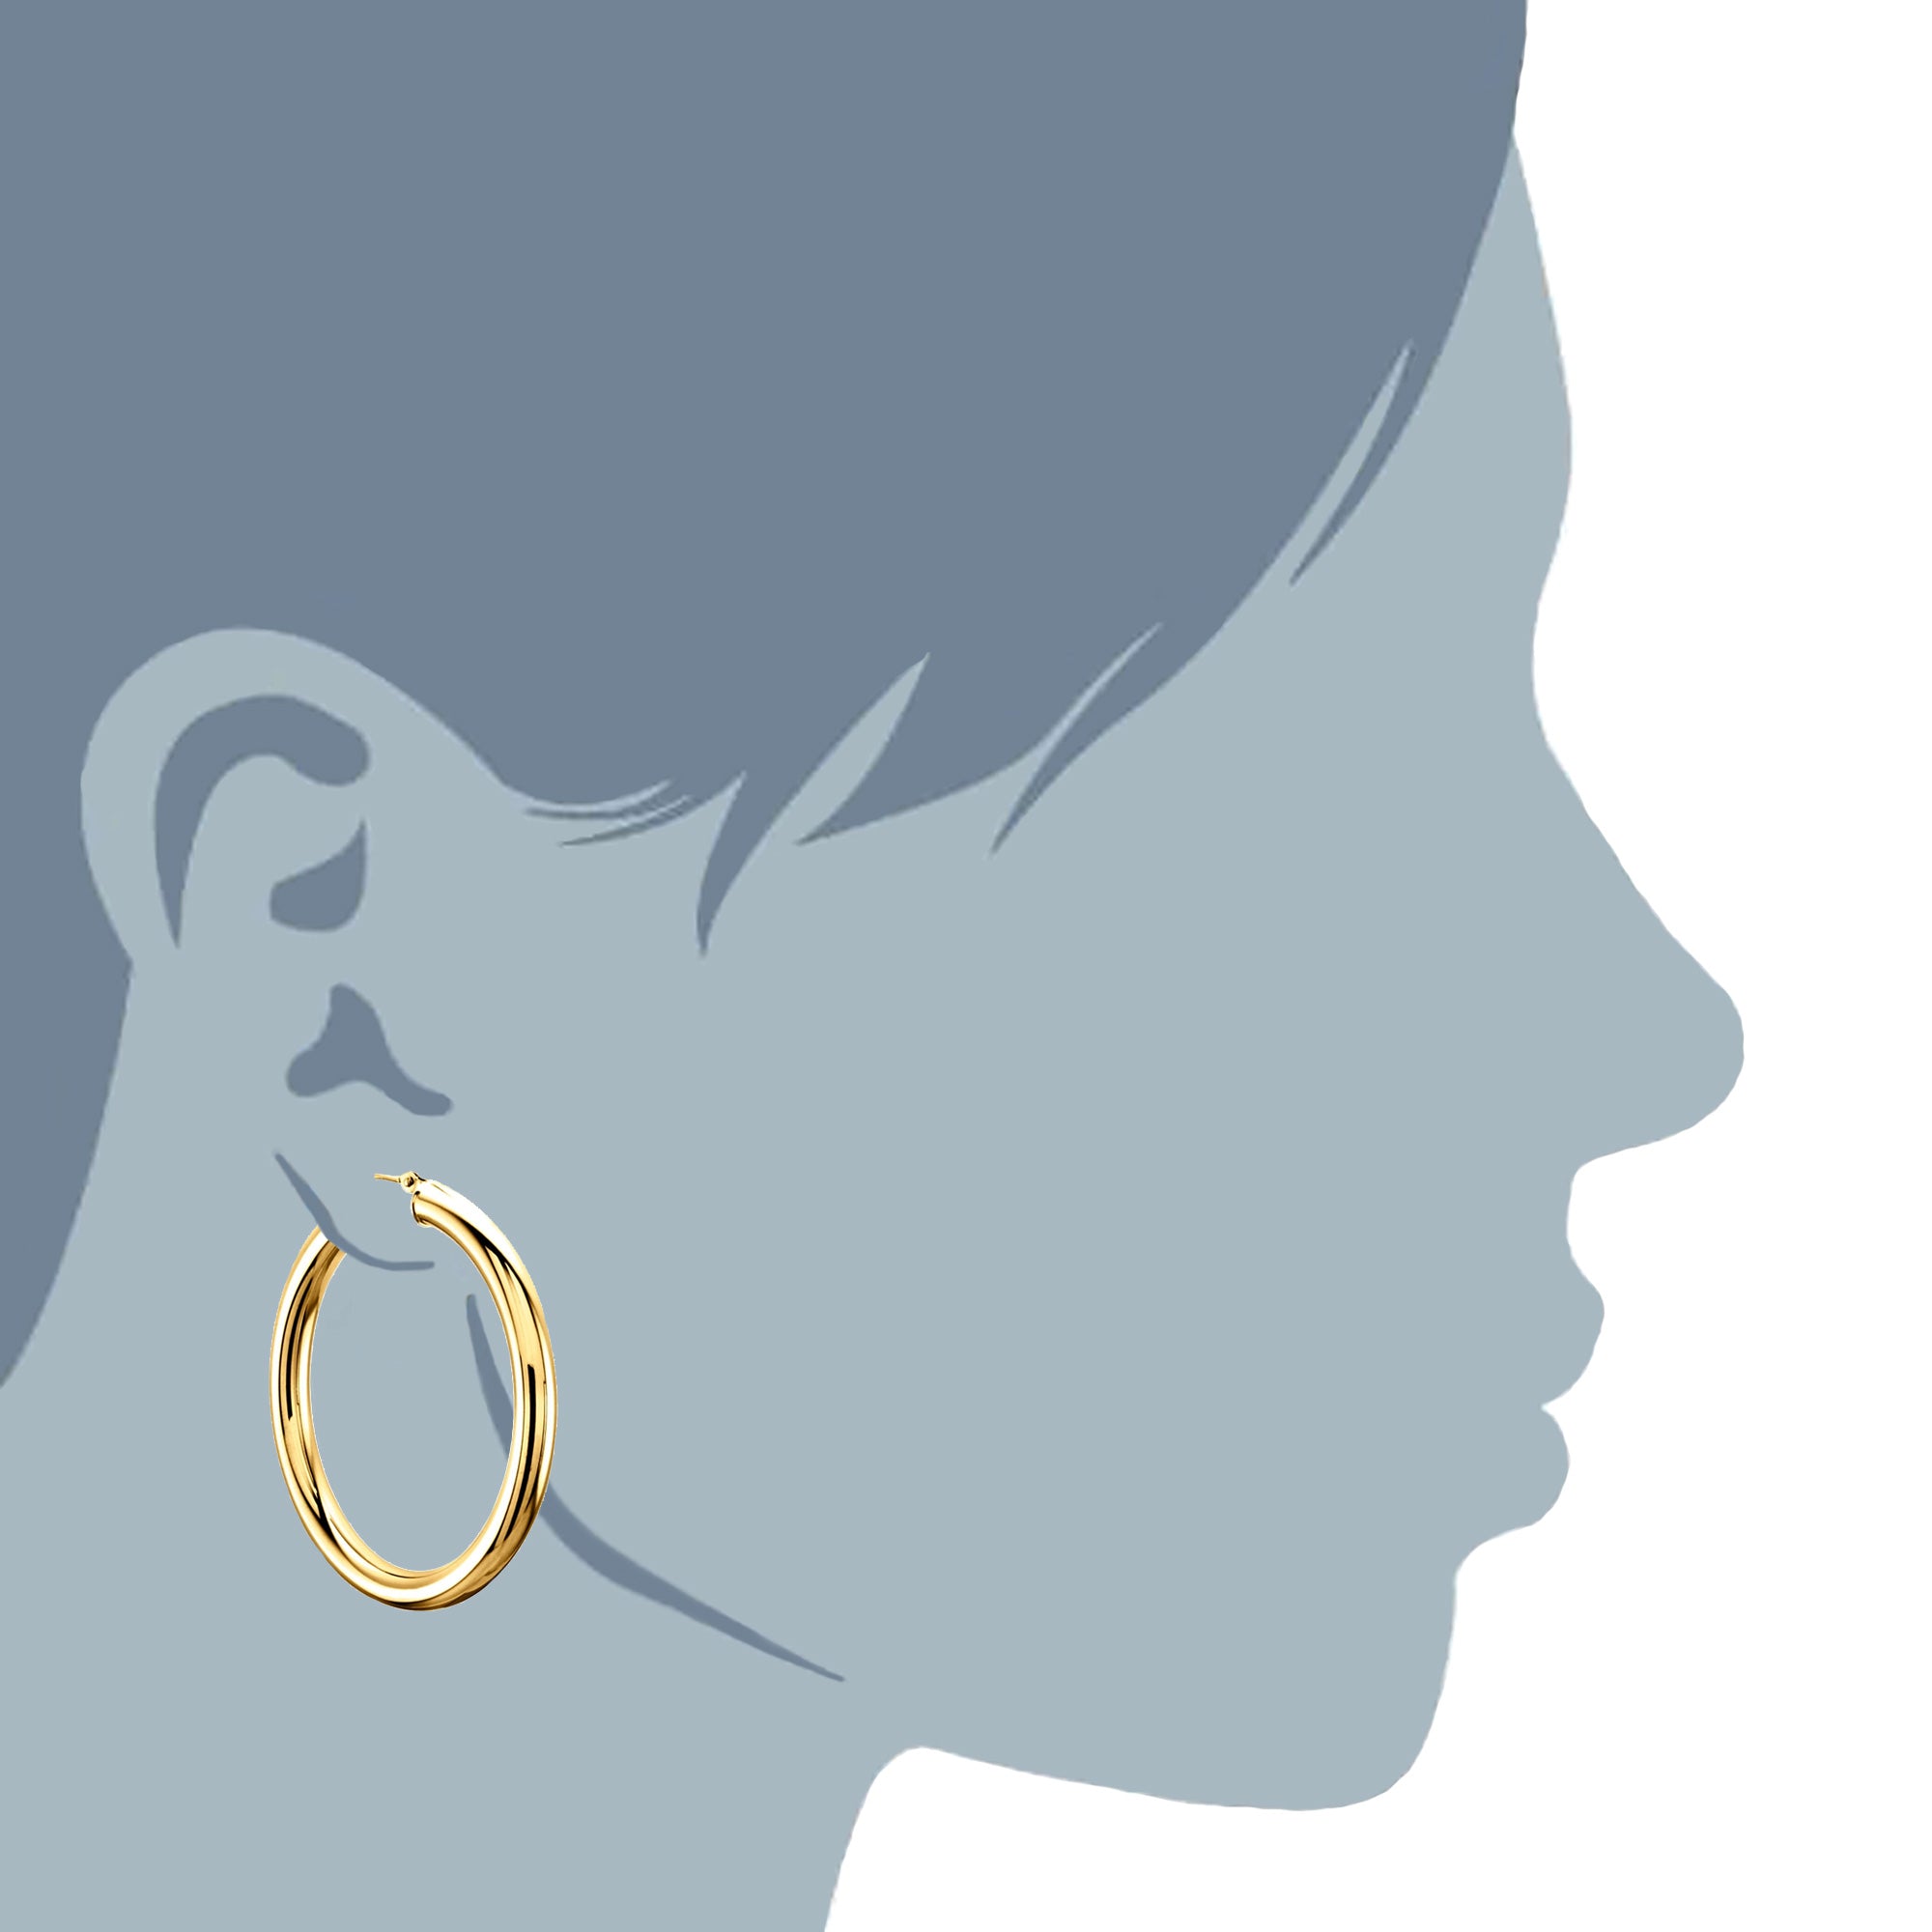 10k Yellow Gold 3mm Shiny Round Tube Hoop Earrings